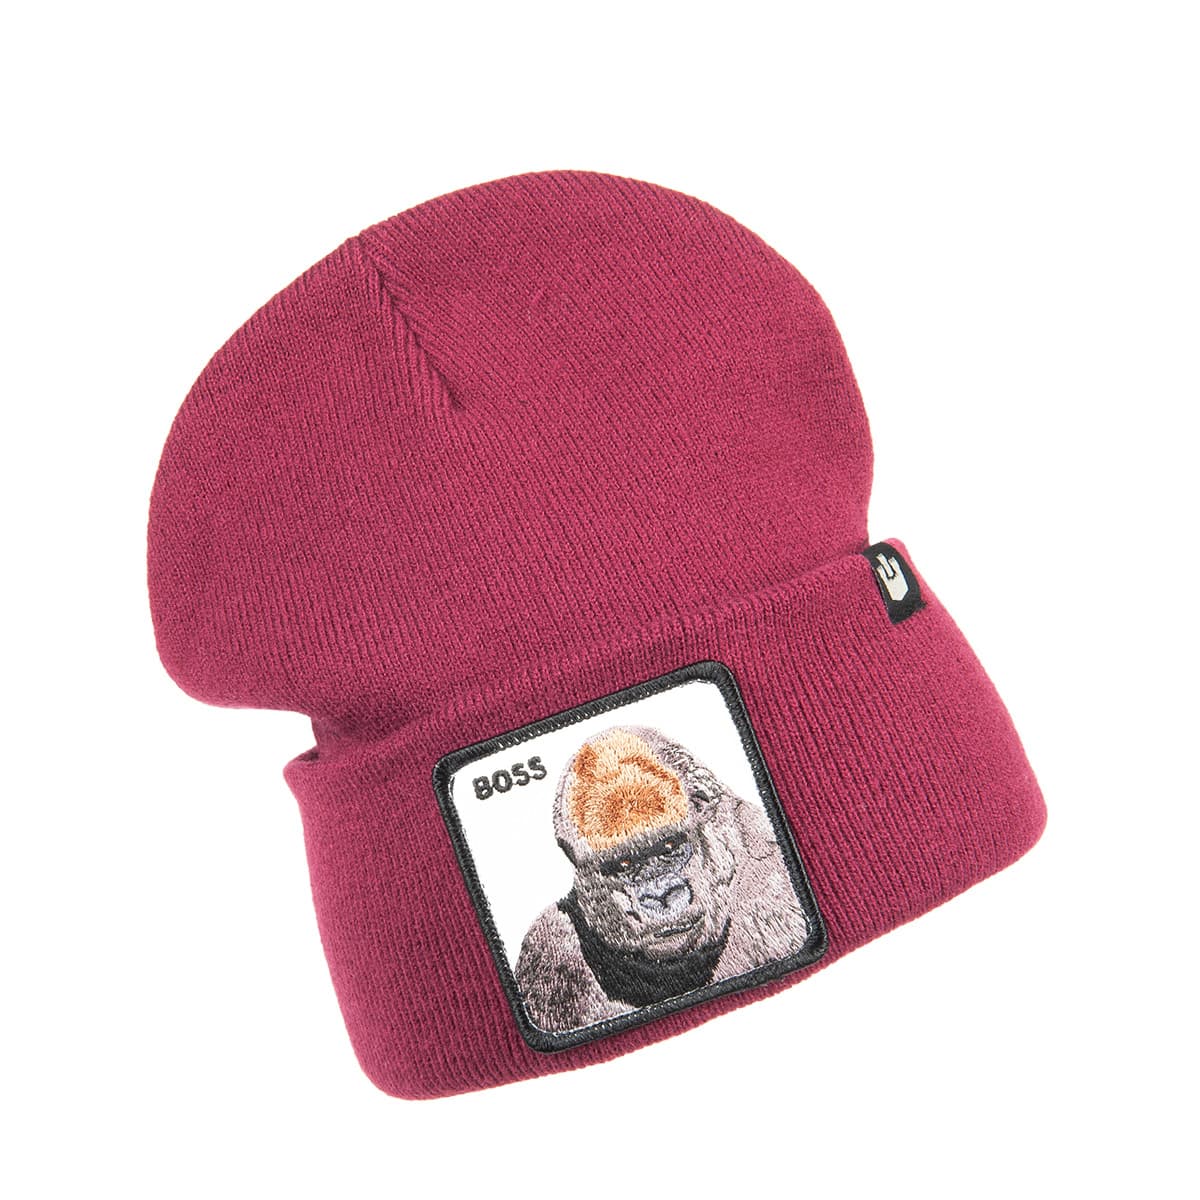 GOORIN | Motiv: Apes Knit Beanie Mützen, - warme Boss Handschuhe, kuschelig Schals sowie Hutstuebele Hüte, 